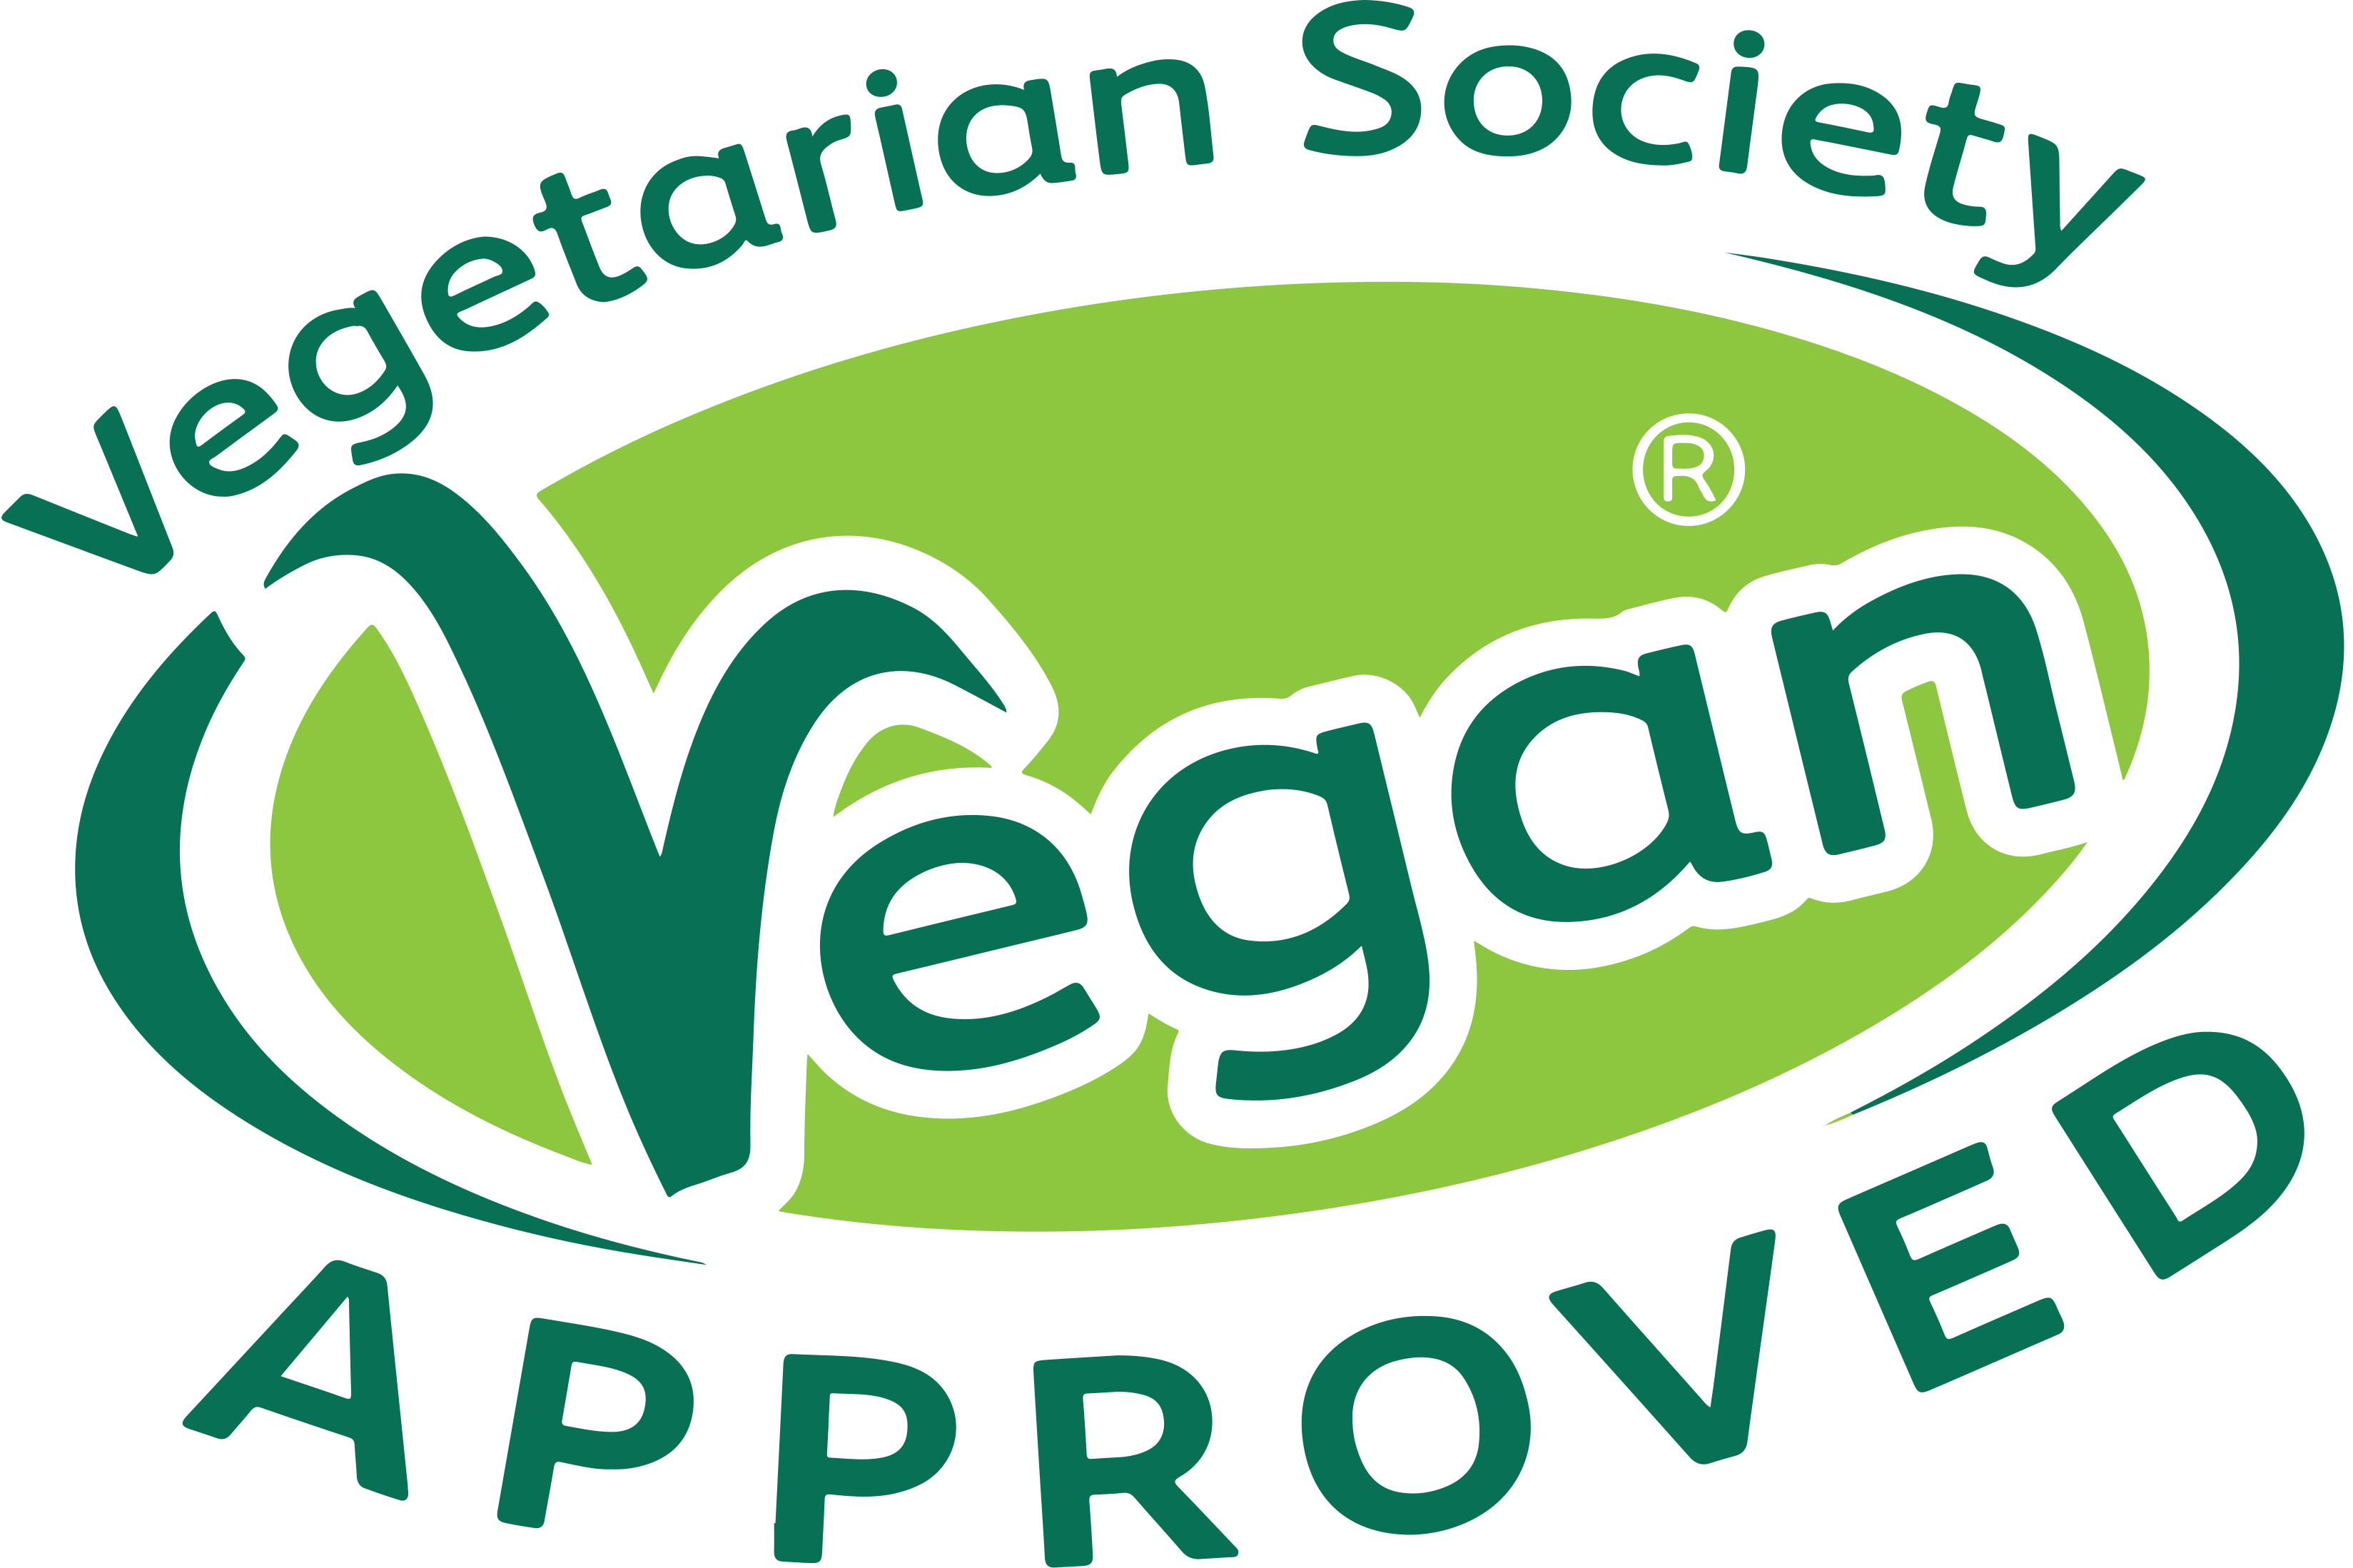 vegan approved